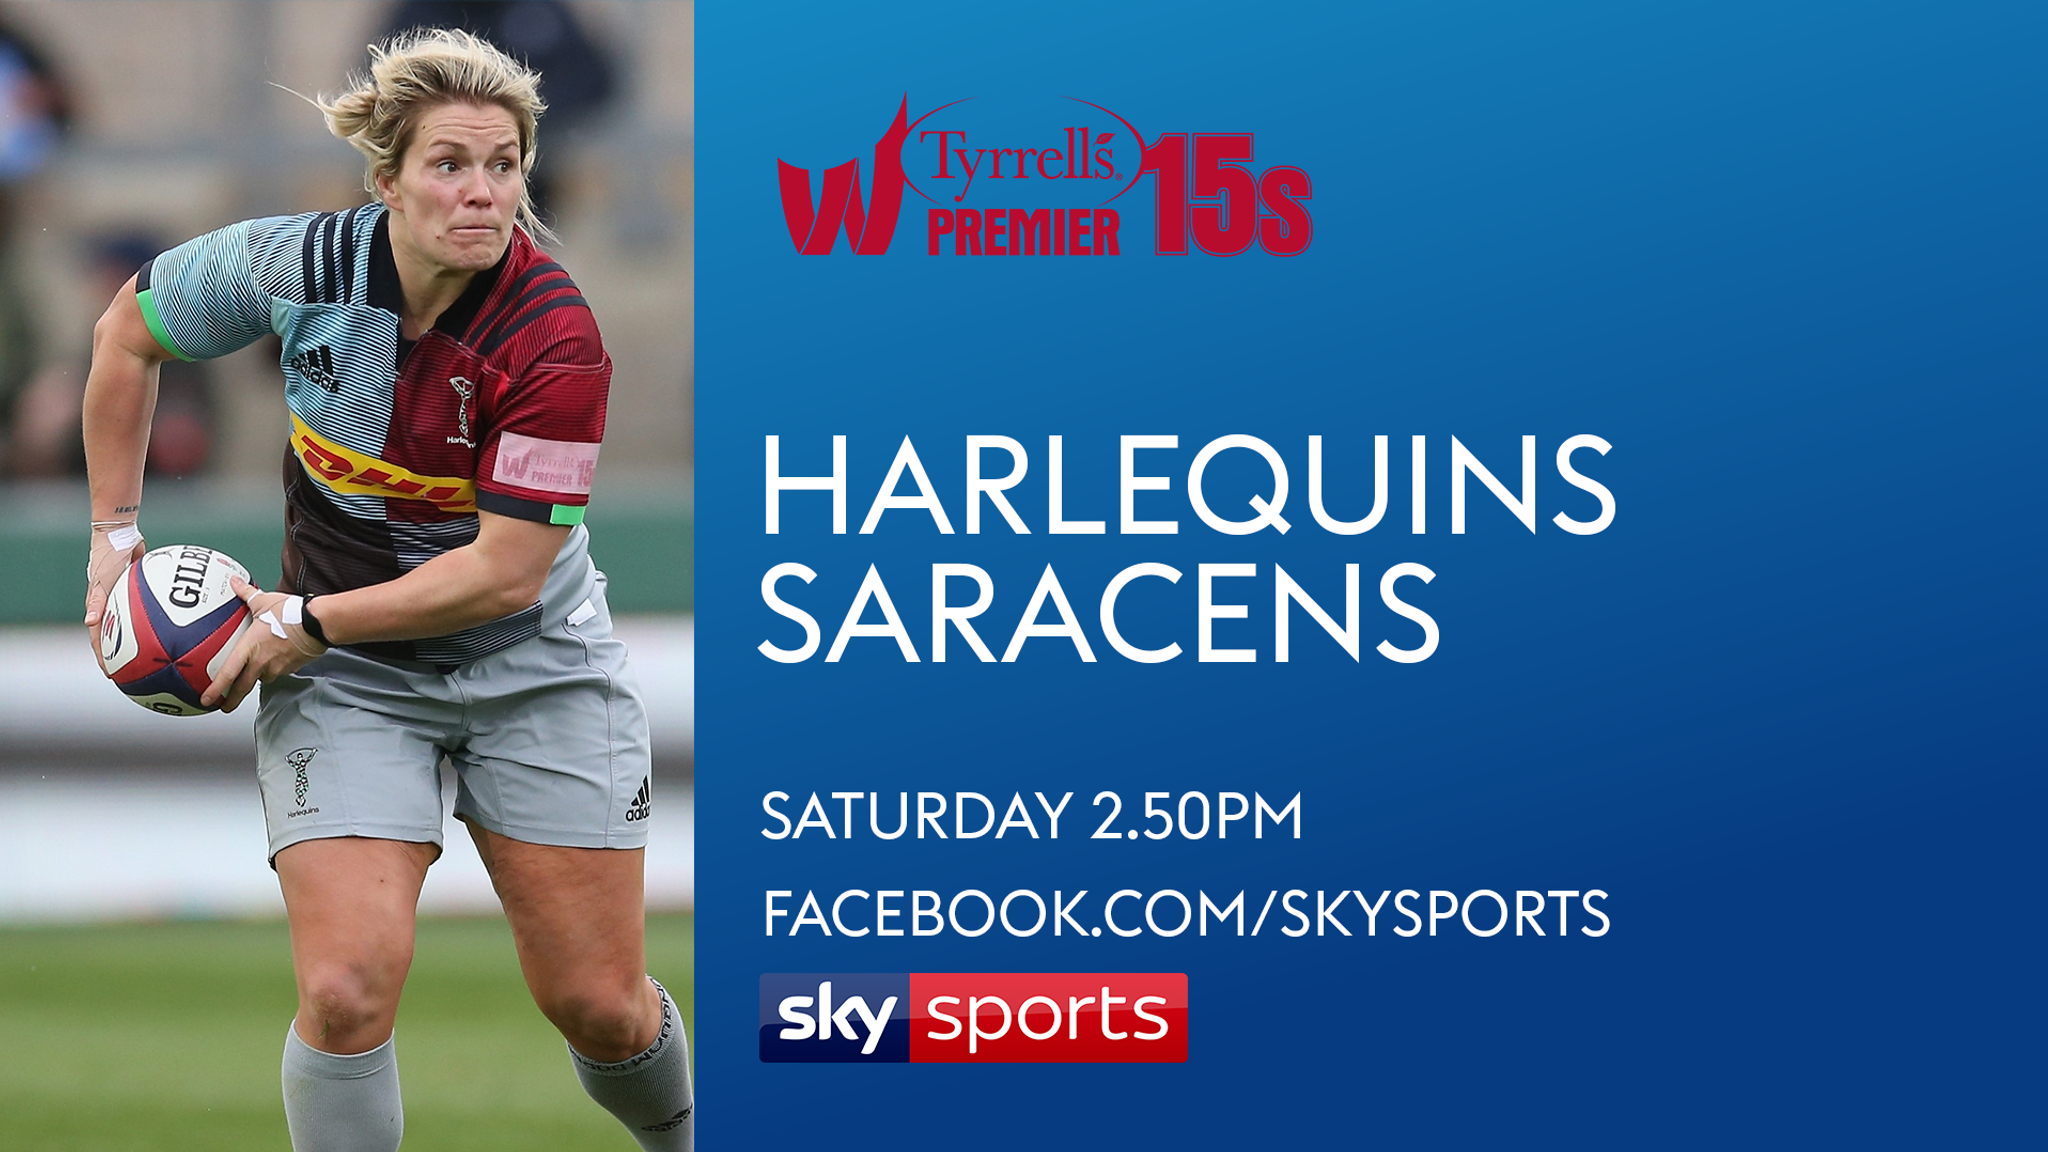 Tyrrells Premier 15s Watch Harlequins vs Saracens on Sky Sports Facebook Rugby Union News Sky Sports